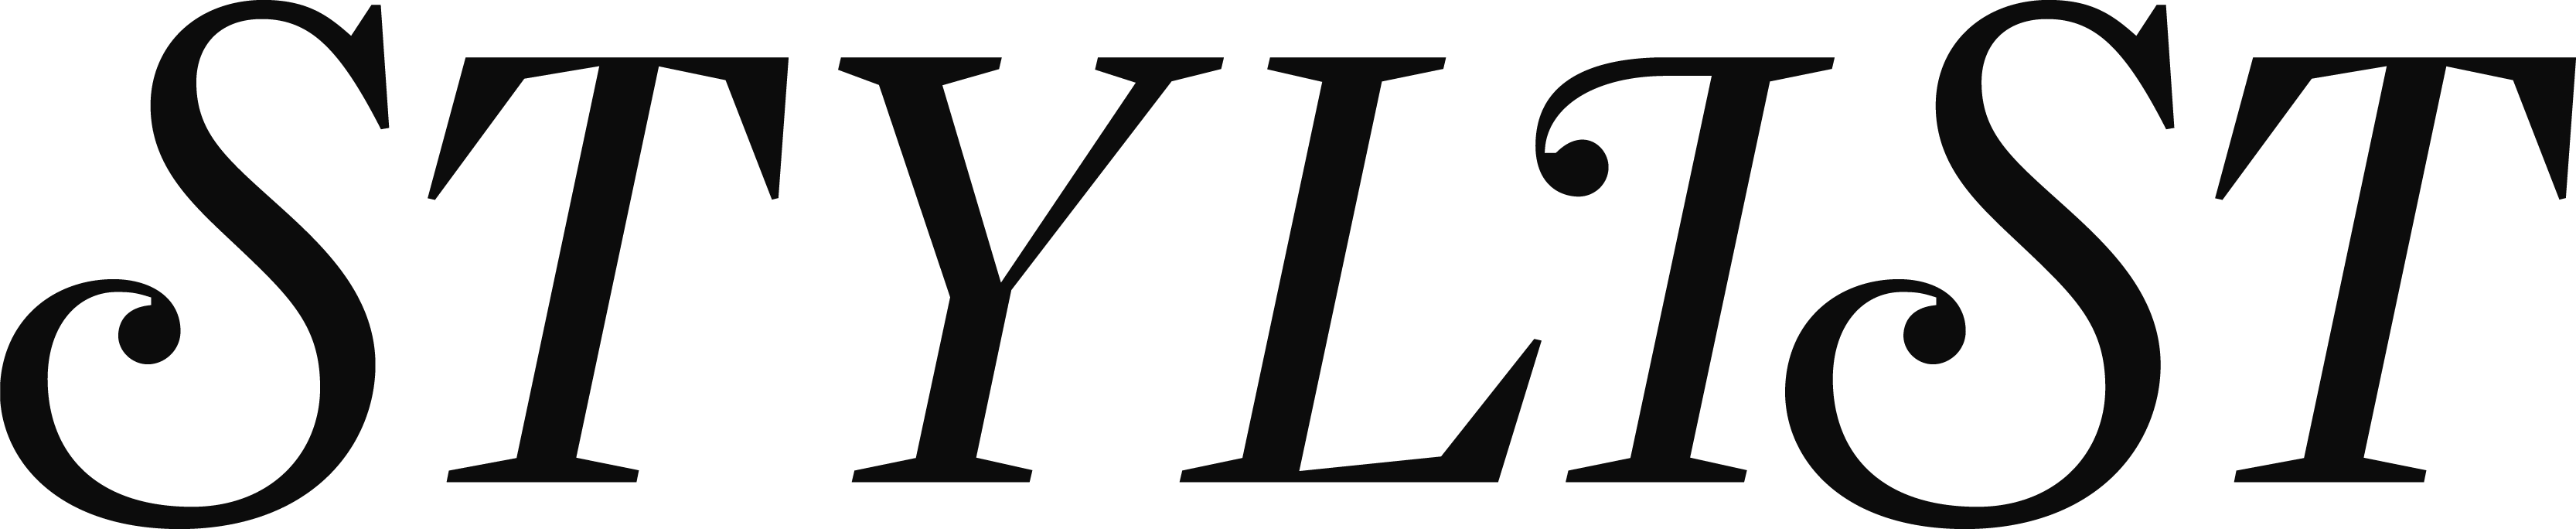 stylist magazine logo